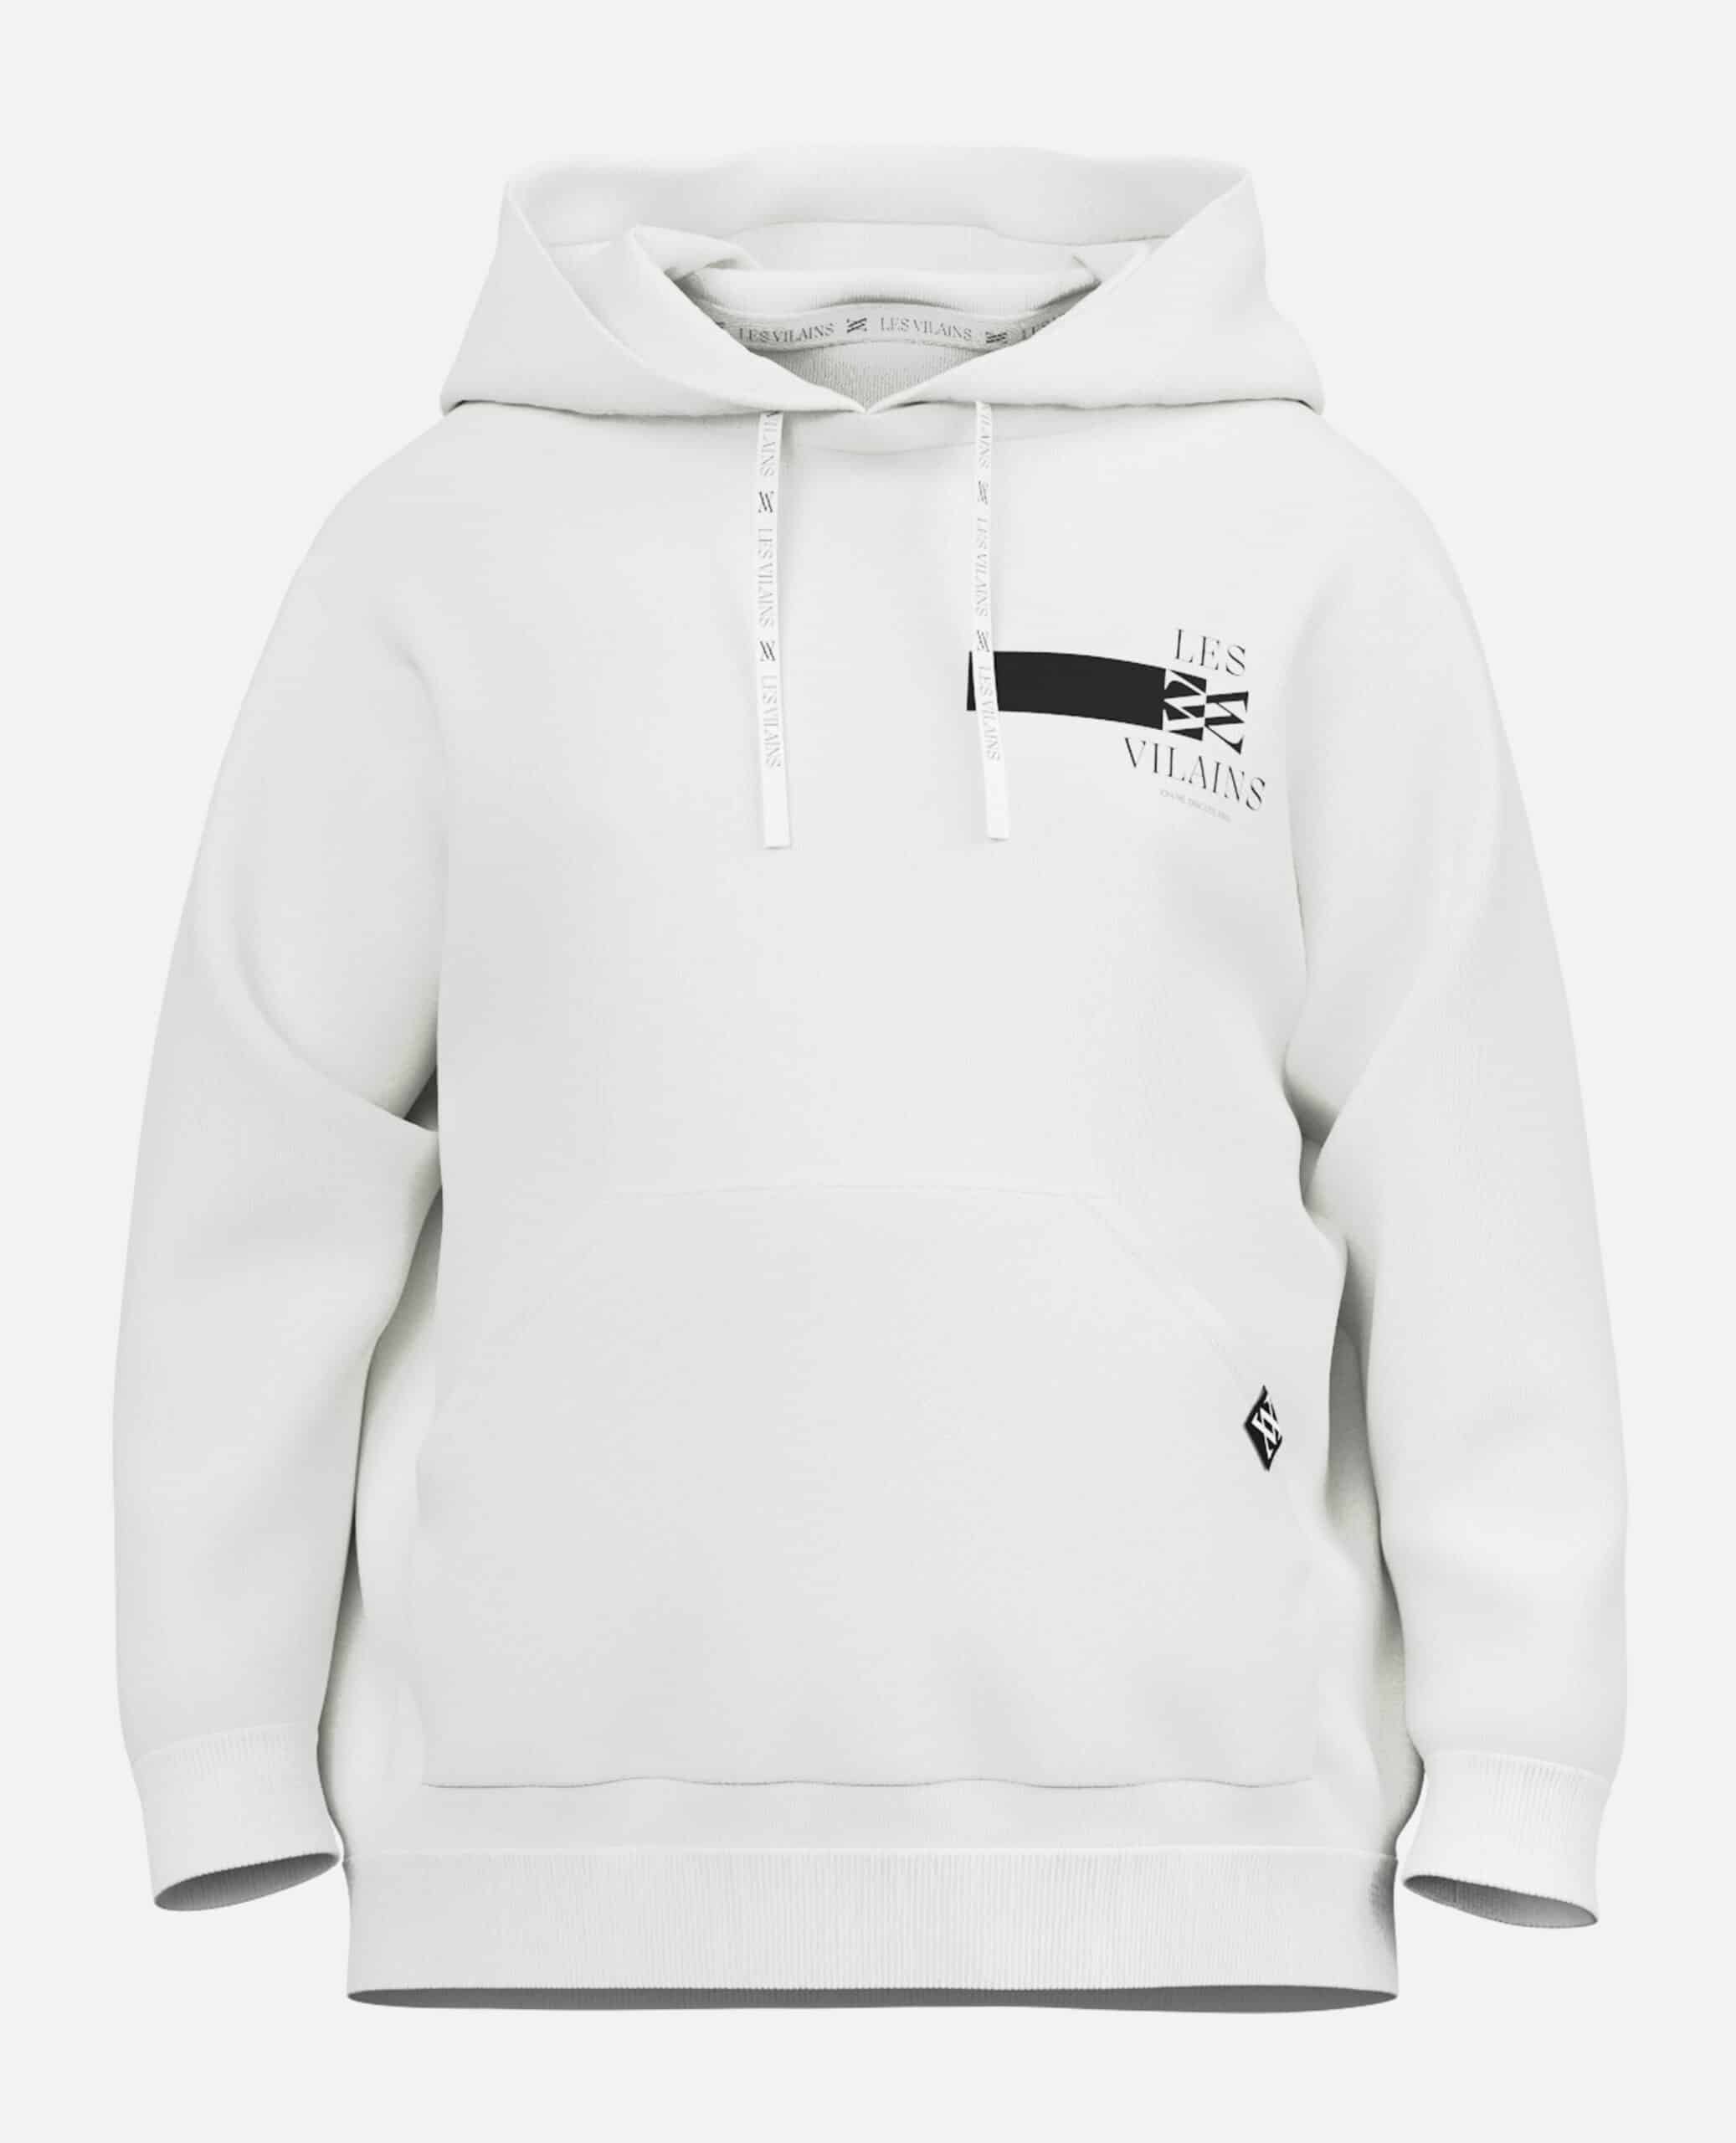 Les Vilains Original Streetwear white hoodie front